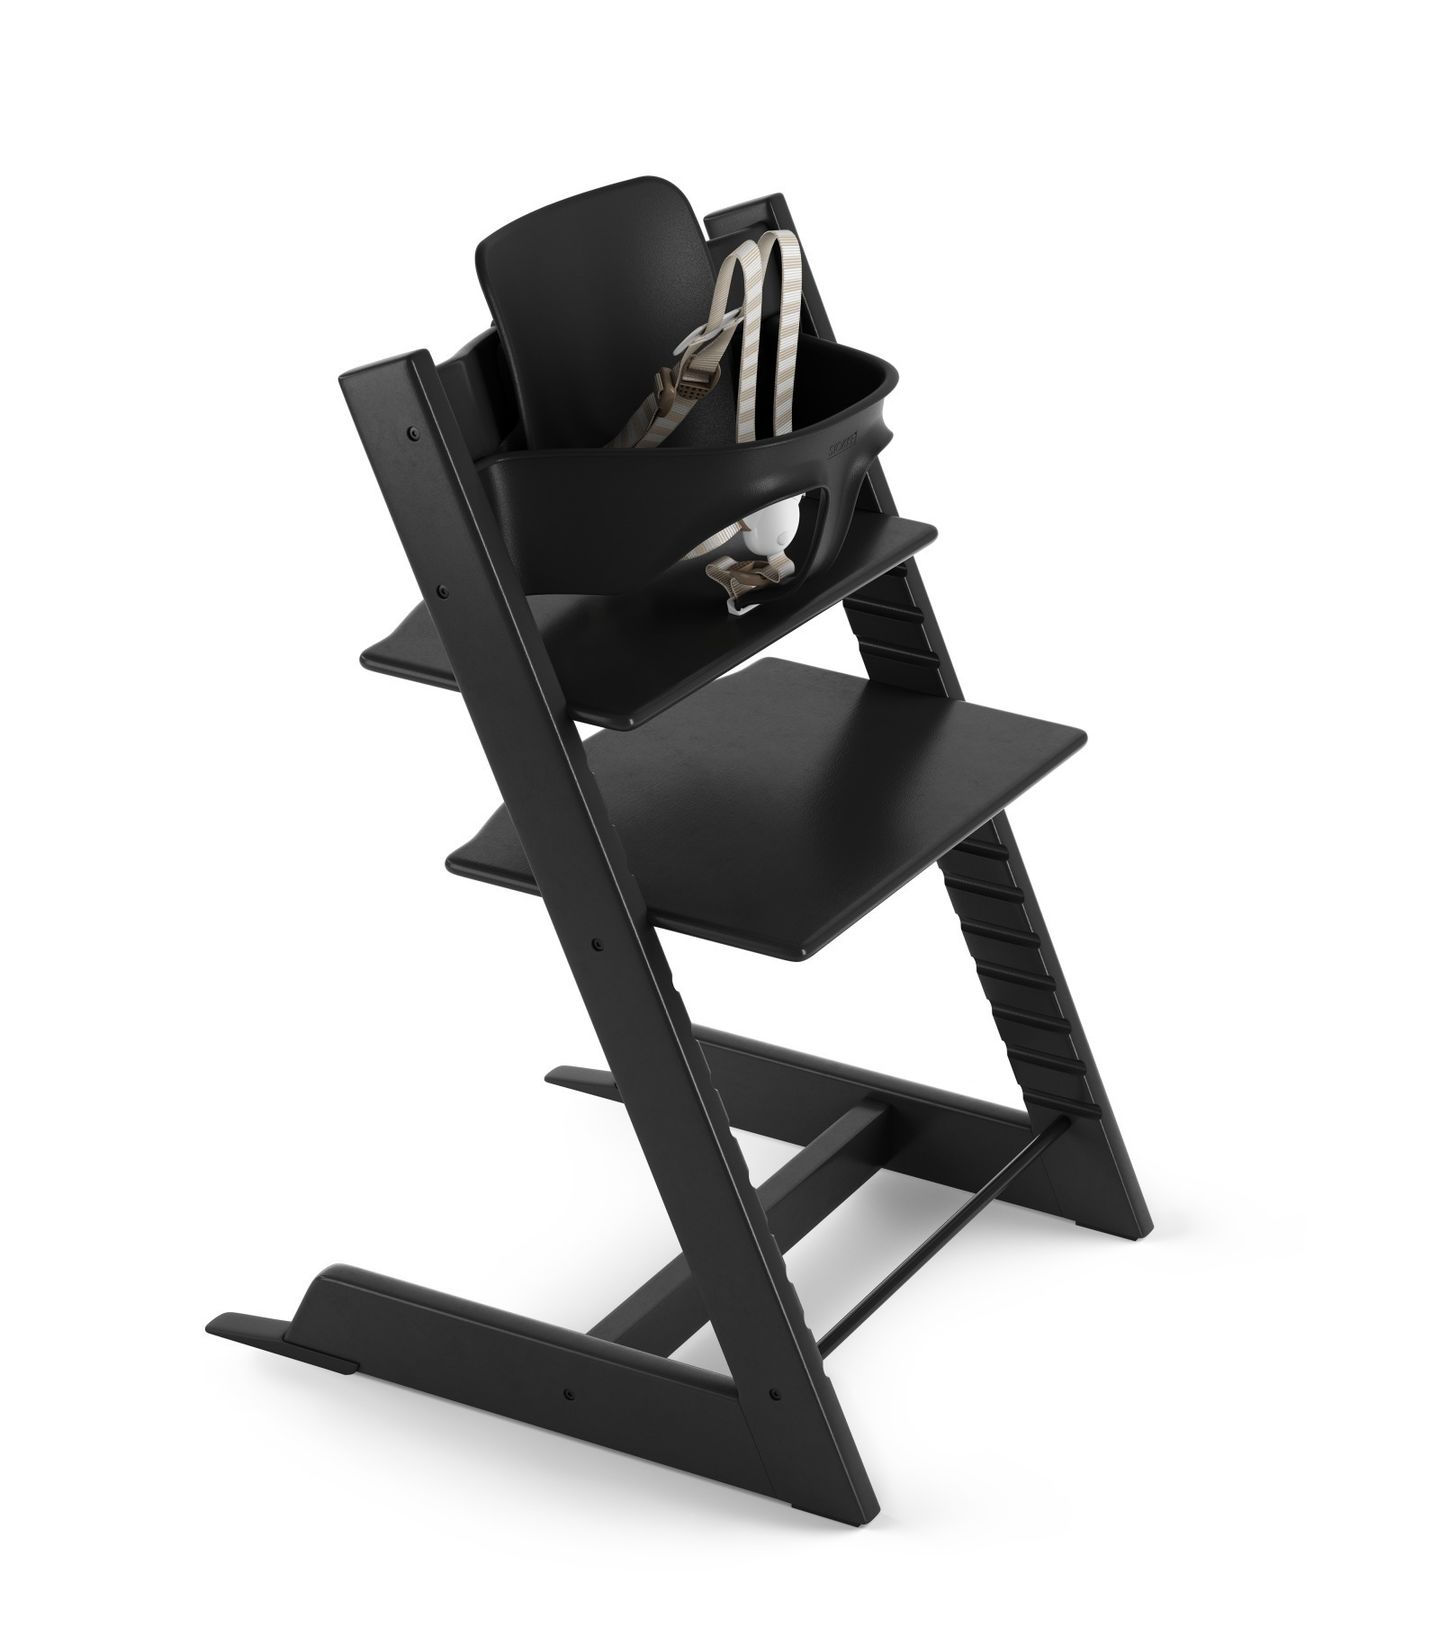 Stokke Tripp Trapp High Chair Package - Black